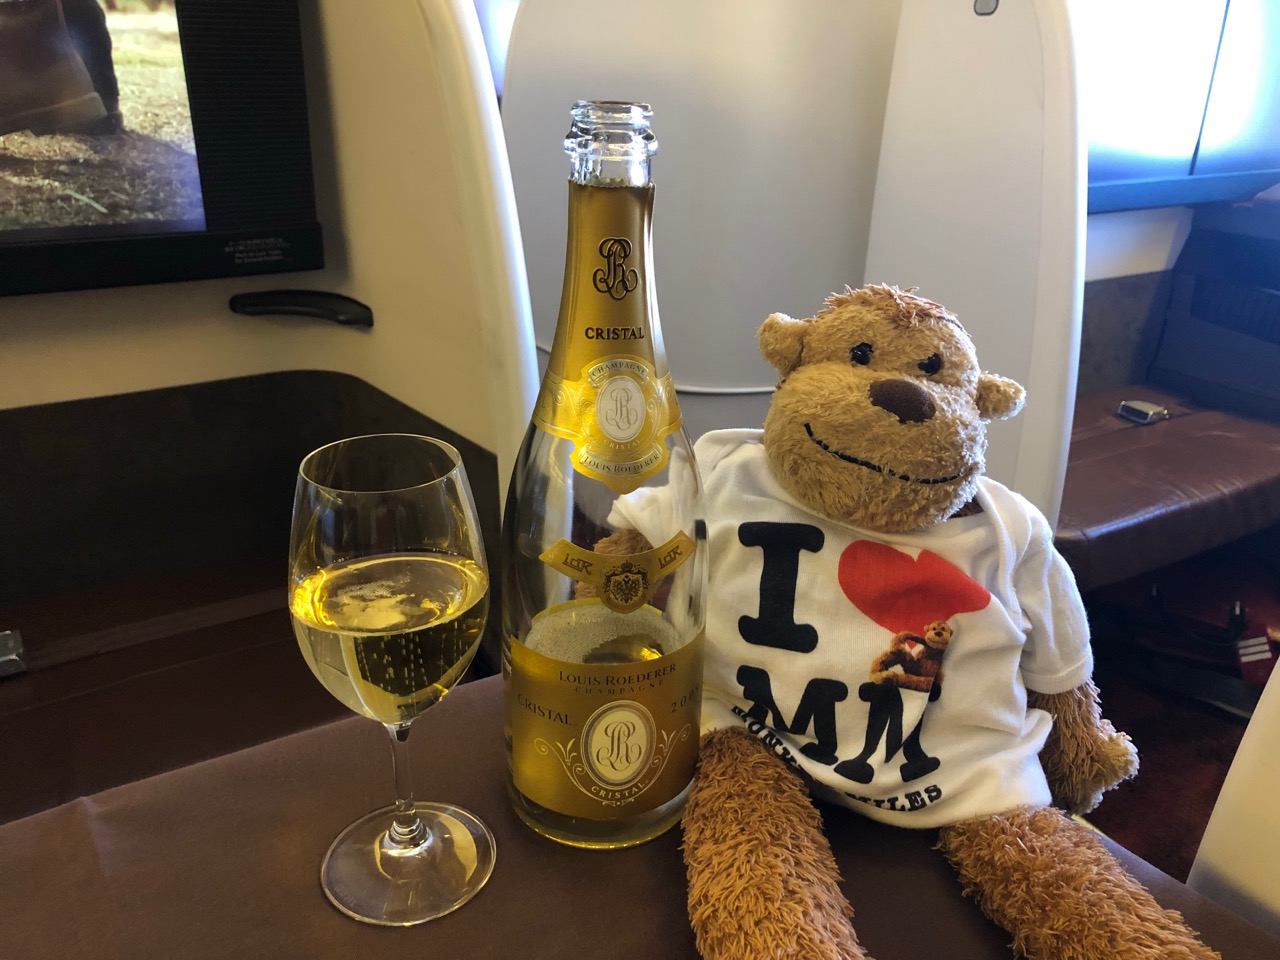 a stuffed animal next to a glass of wine